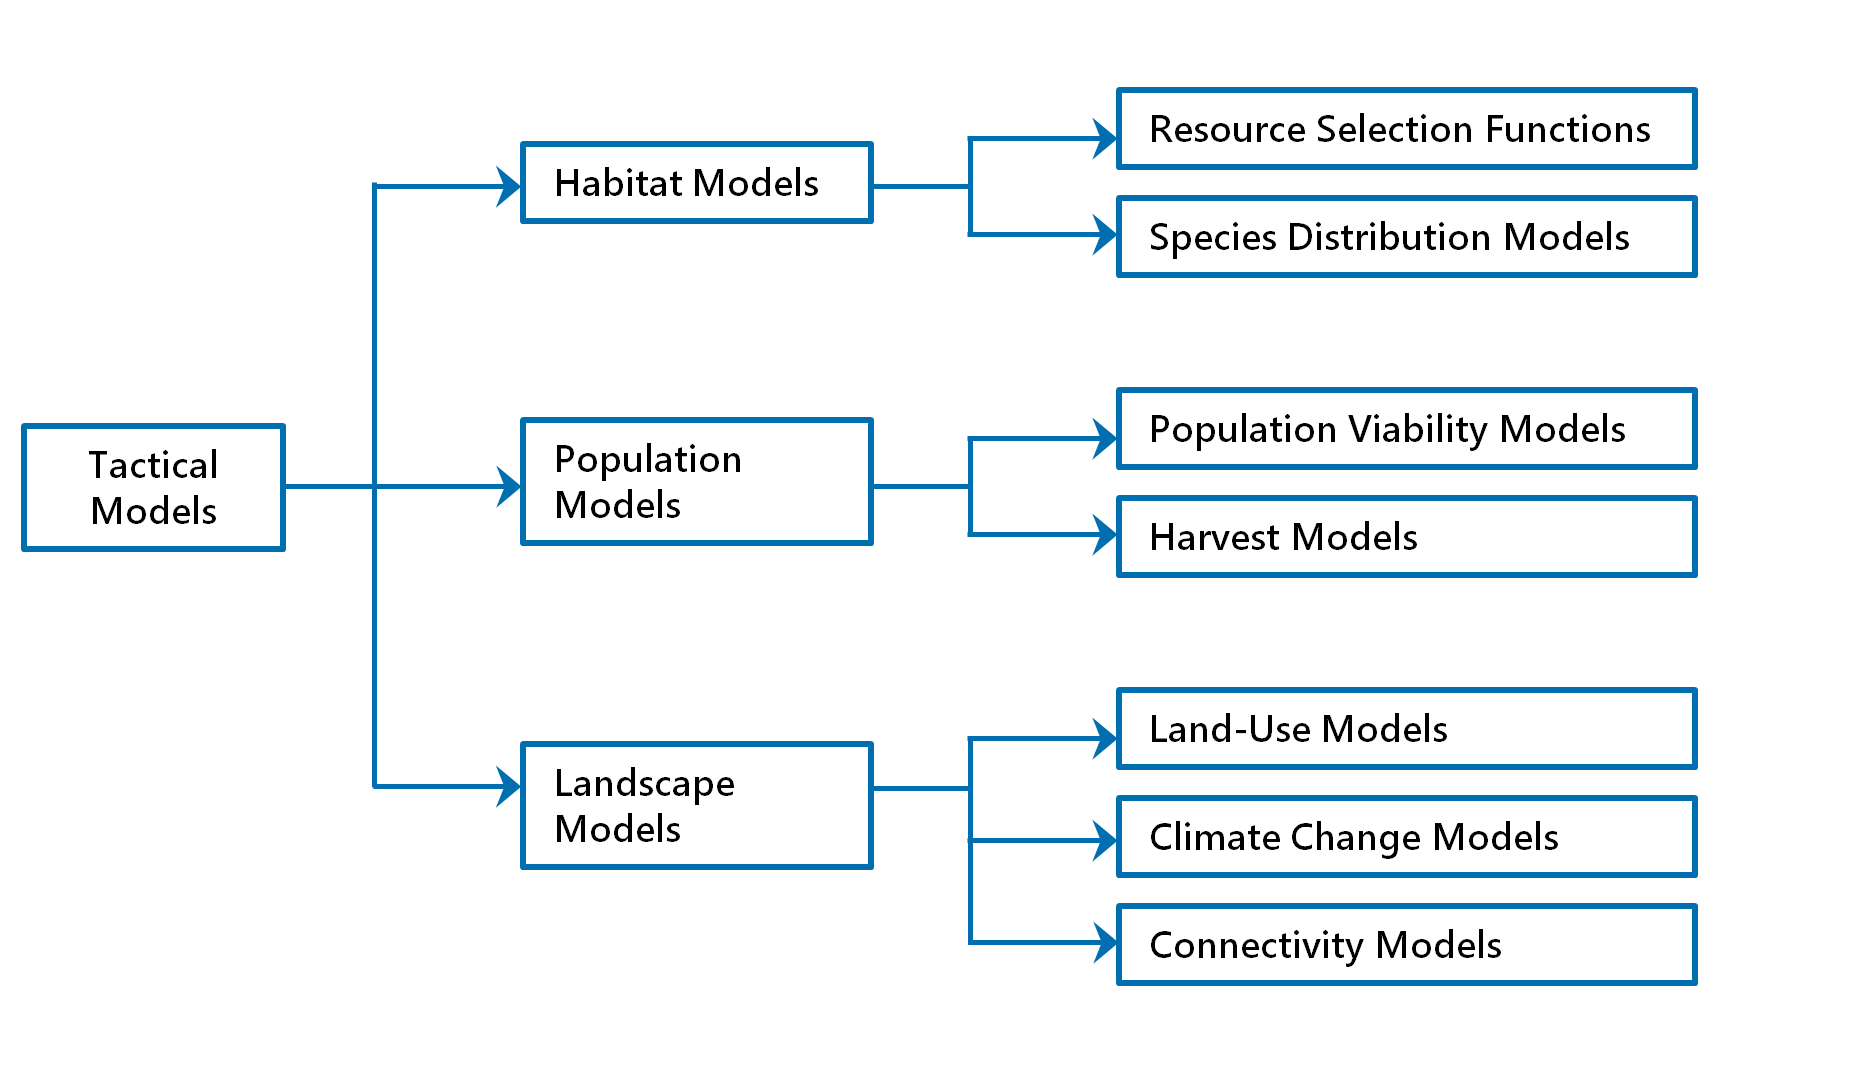 Categories of ecological models